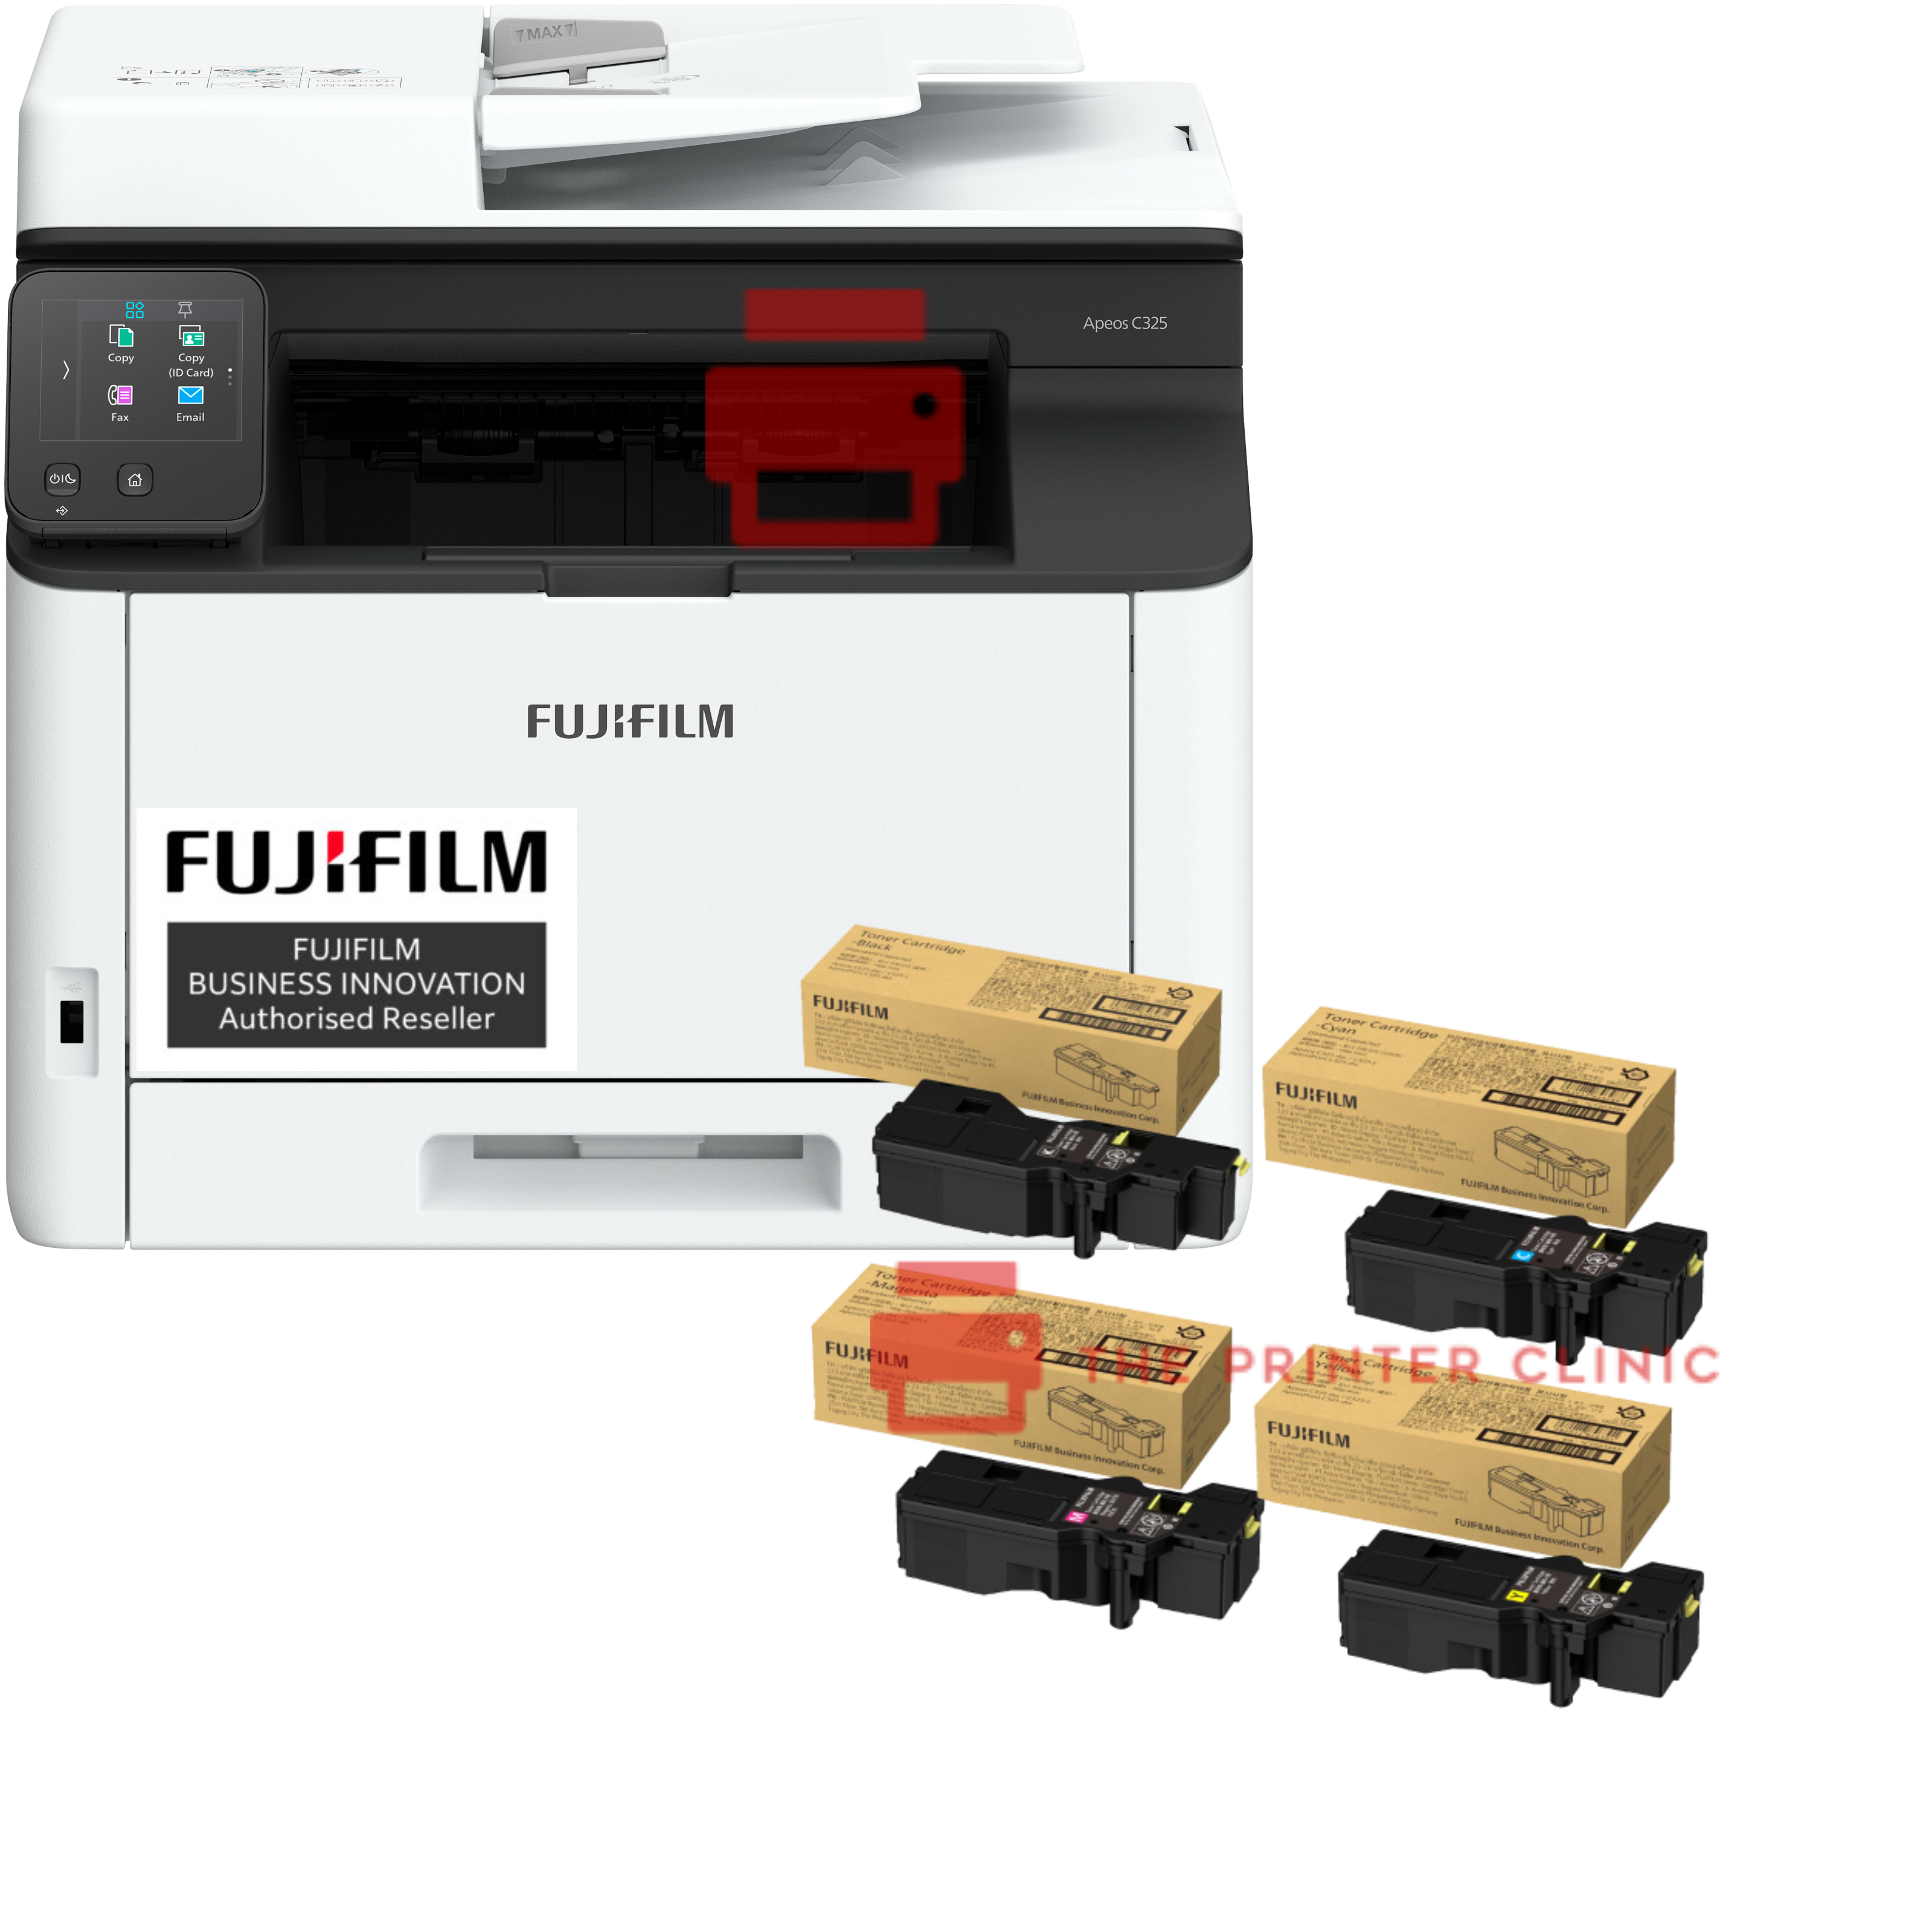 FUJIFILM Apeos C325dw Wireless A4 Colour Multifunction Printer + Extra Set of Toner (Bonus 3 Year Warranty)